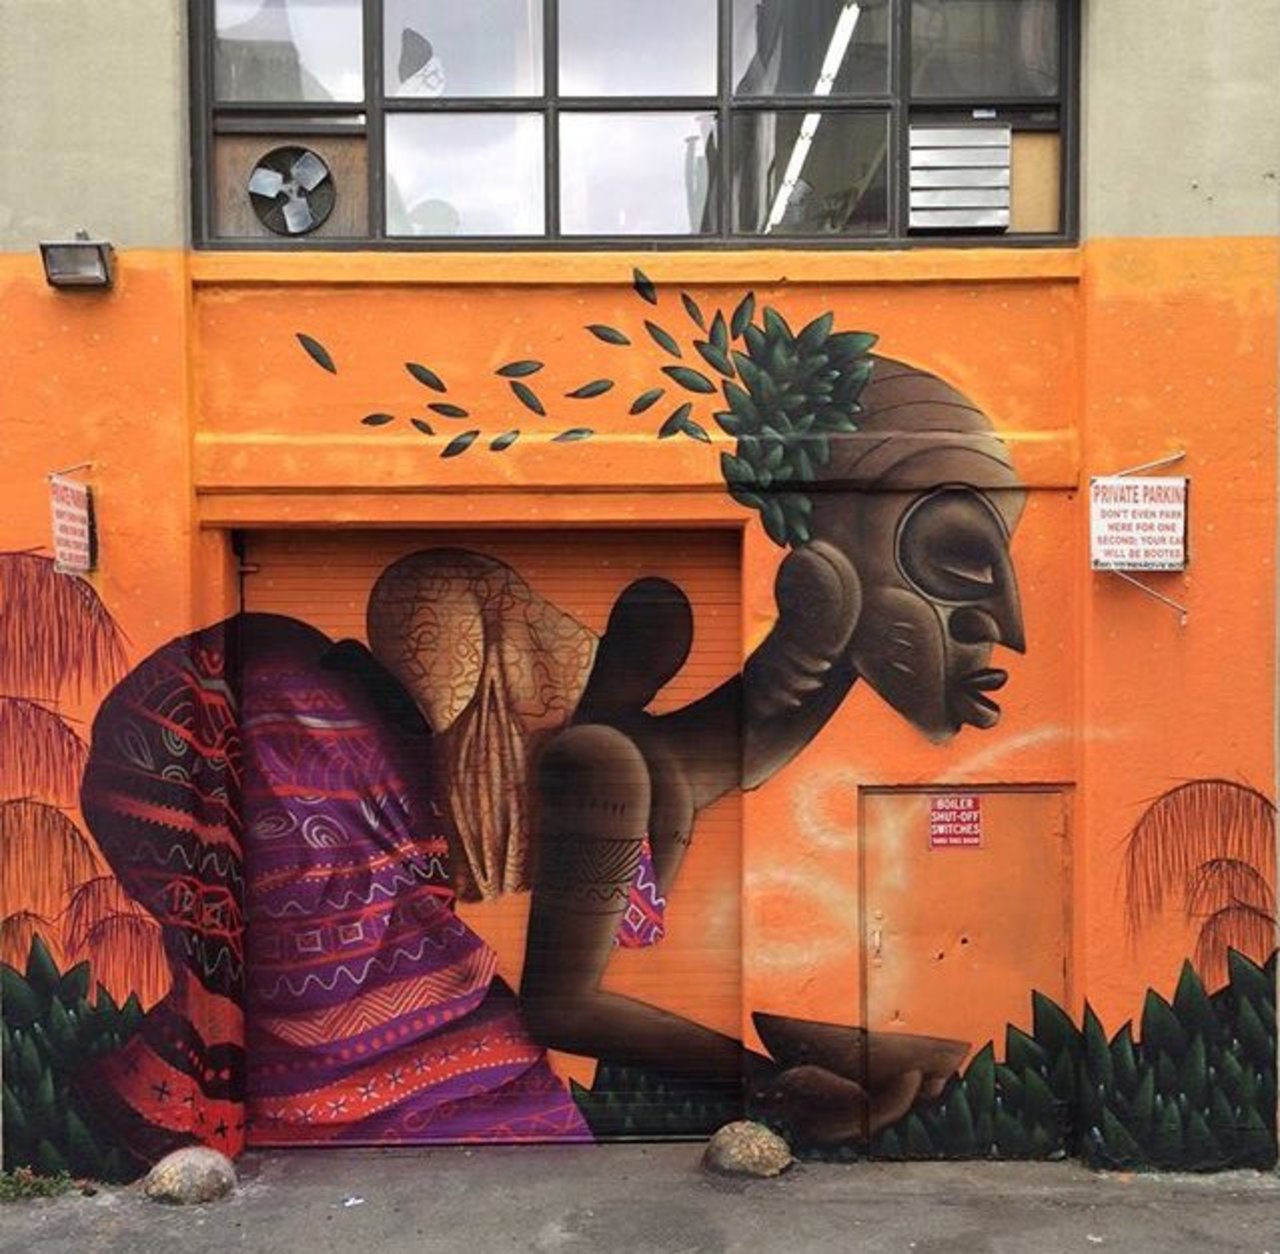 RT @imdanielpadilka: New Street Art by Alexandre Keto in NYC 

#art #graffiti #mural #streetart https://t.co/ZevOegL0Hb